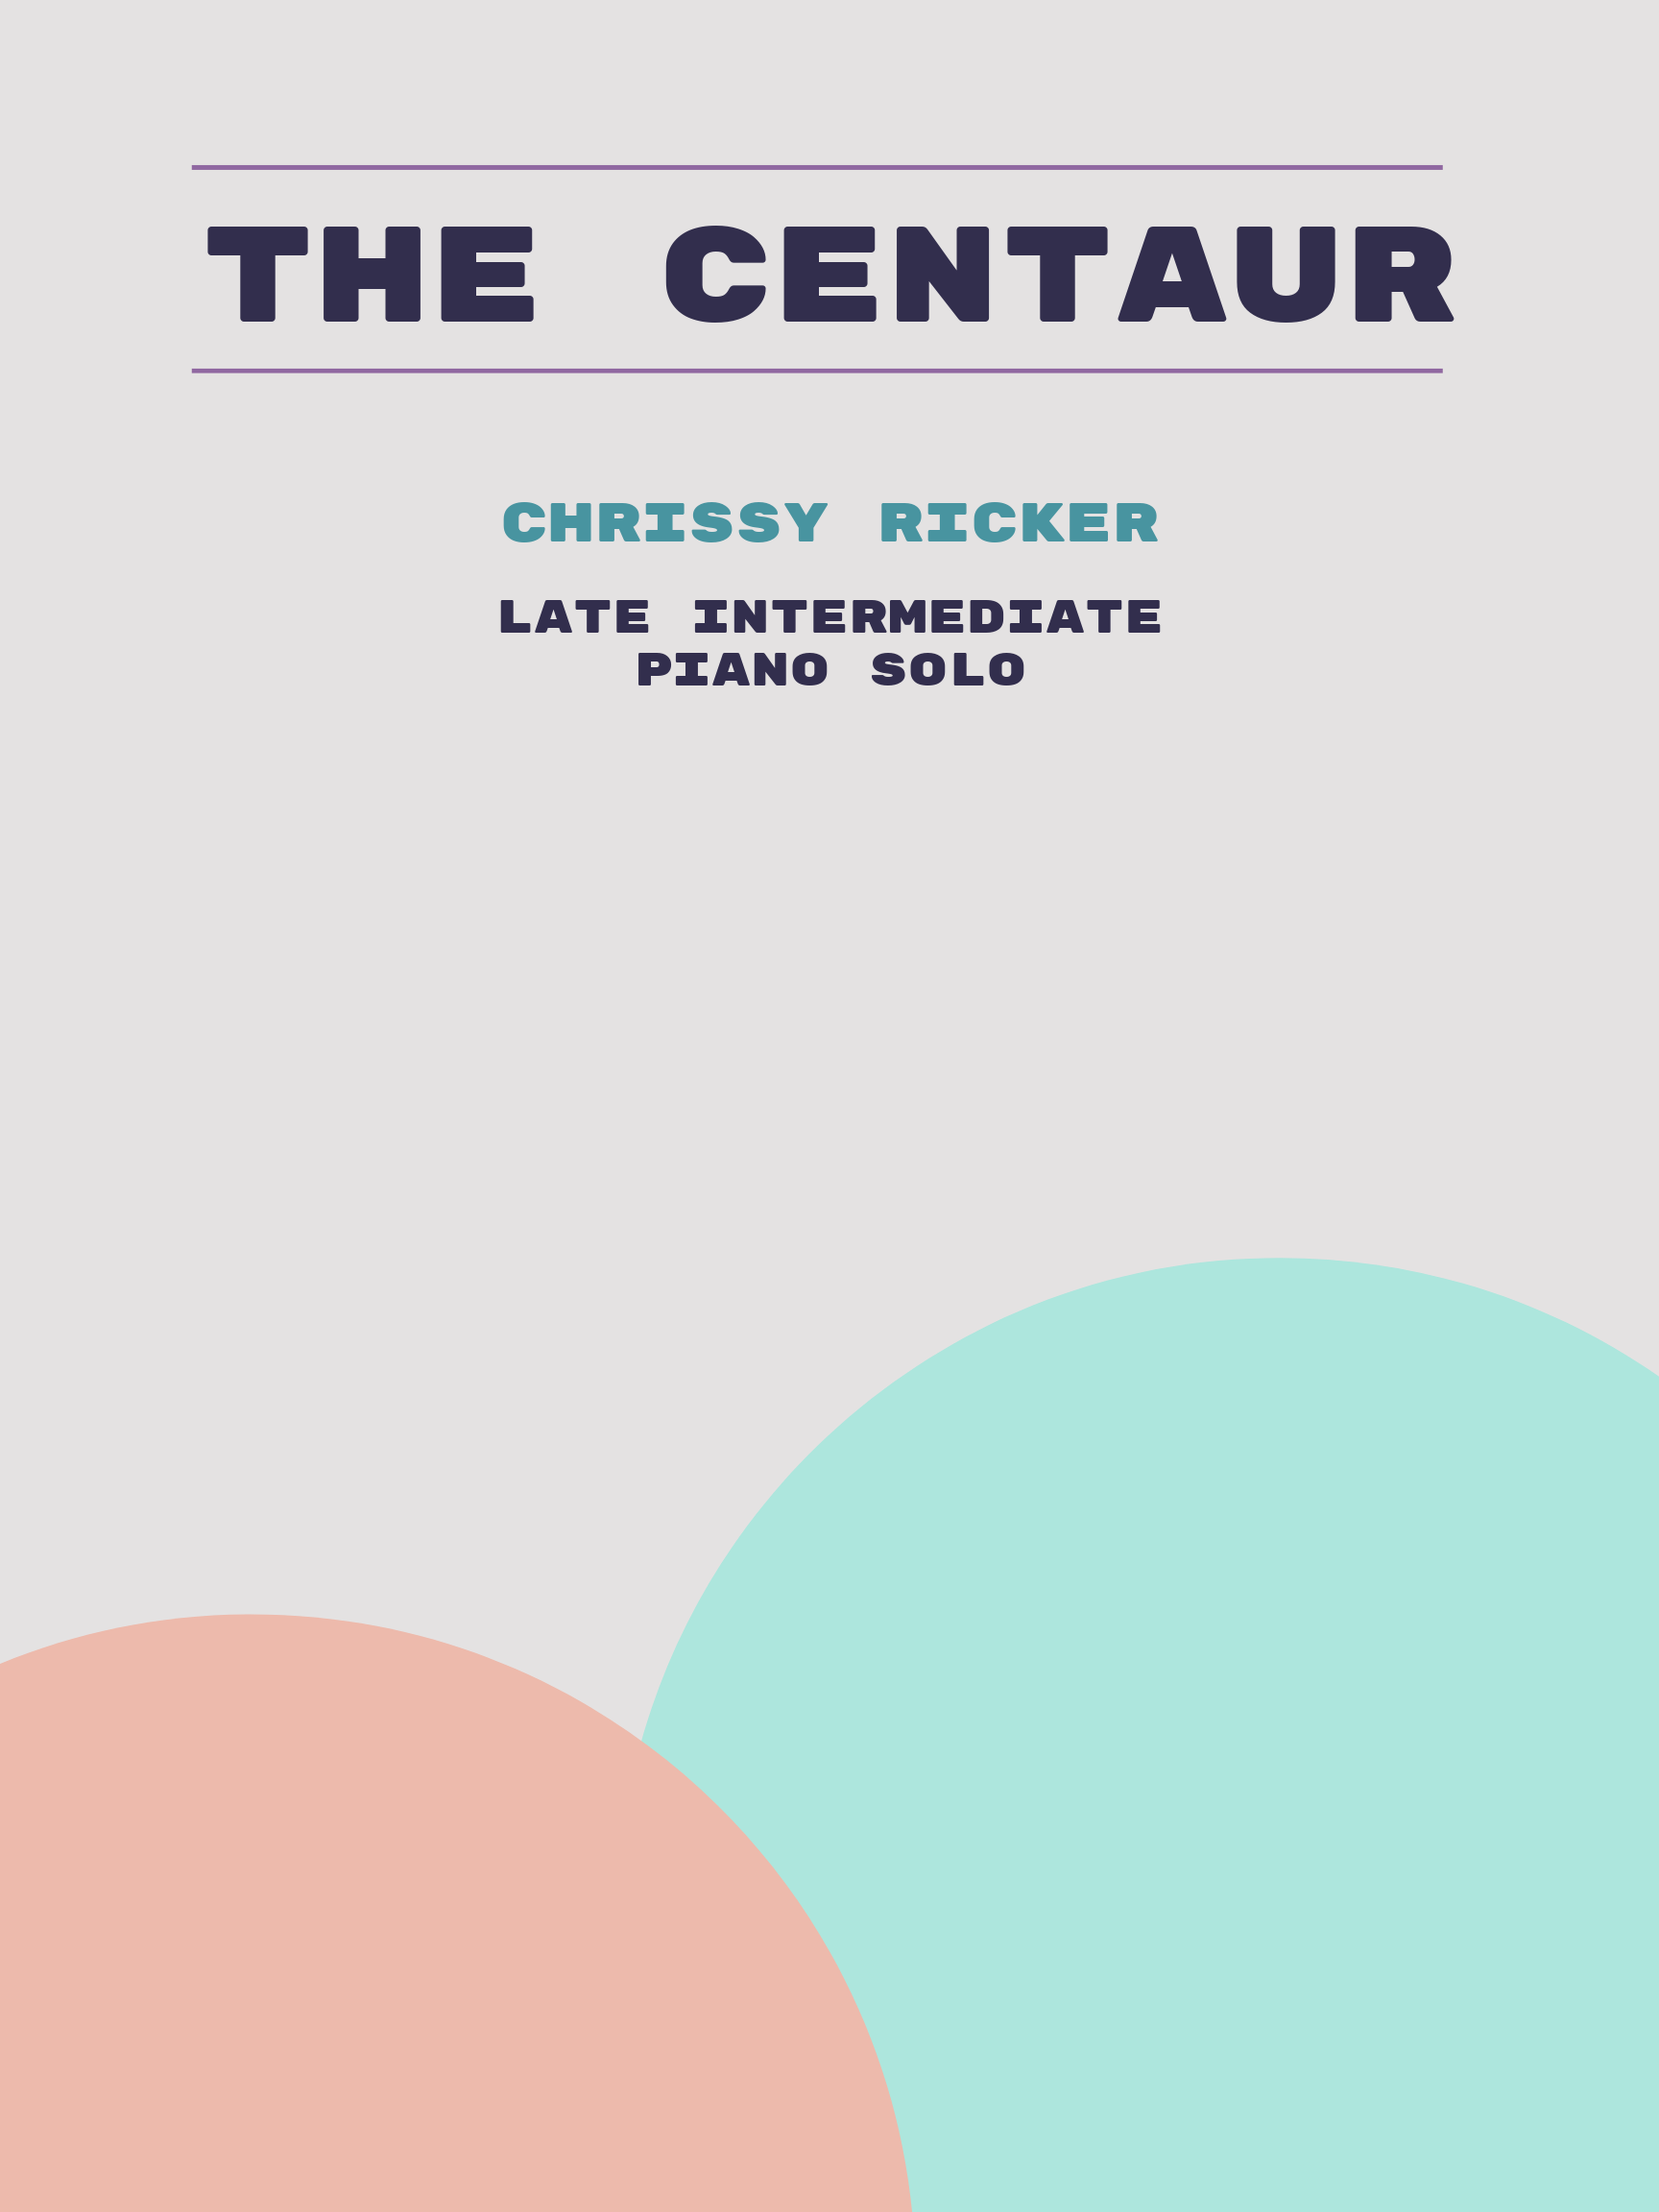 The Centaur by Chrissy Ricker